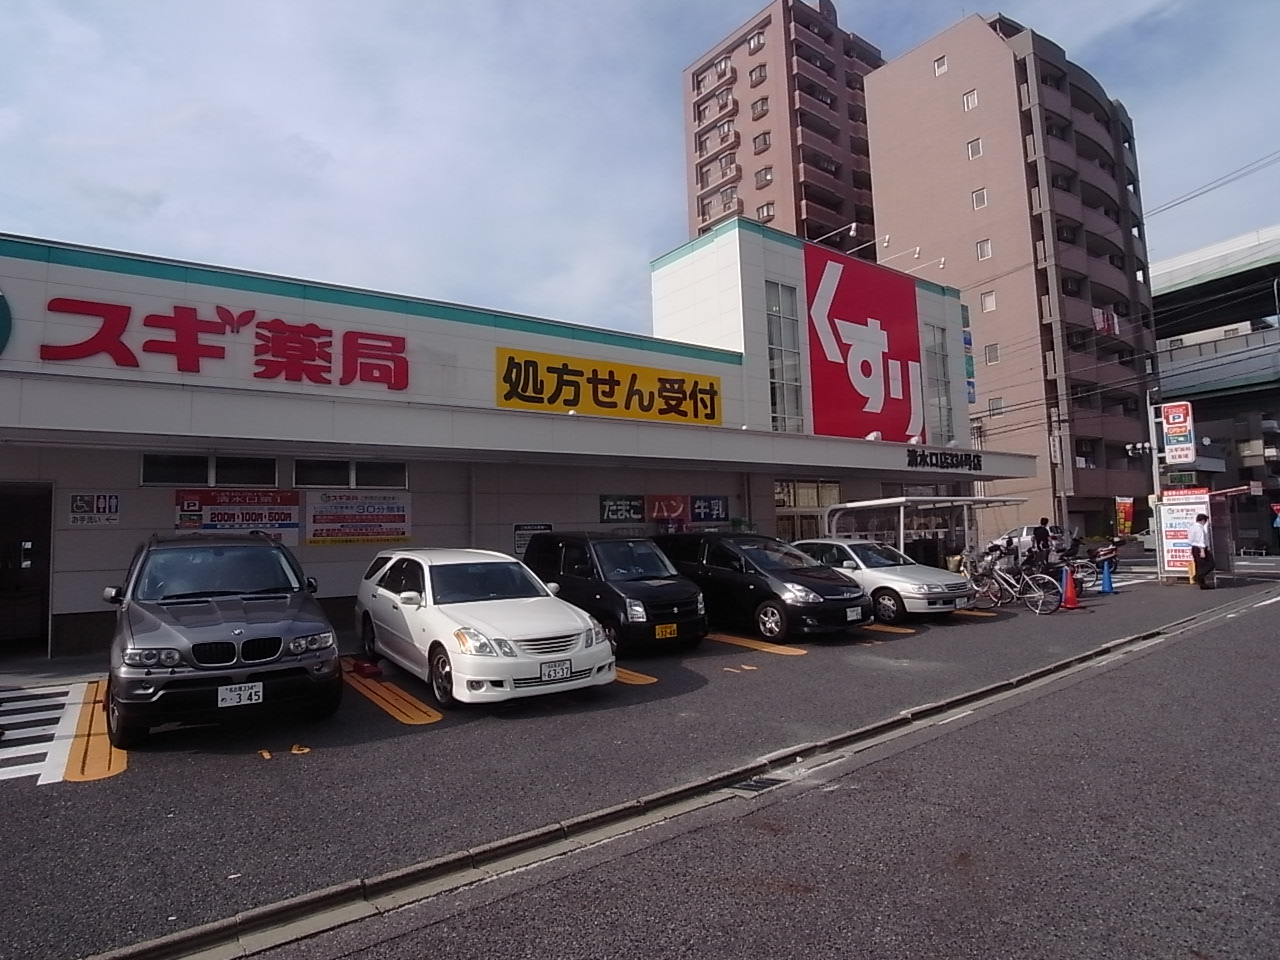 Dorakkusutoa. Cedar pharmacy Shimizuguchi shop 193m until (drugstore)